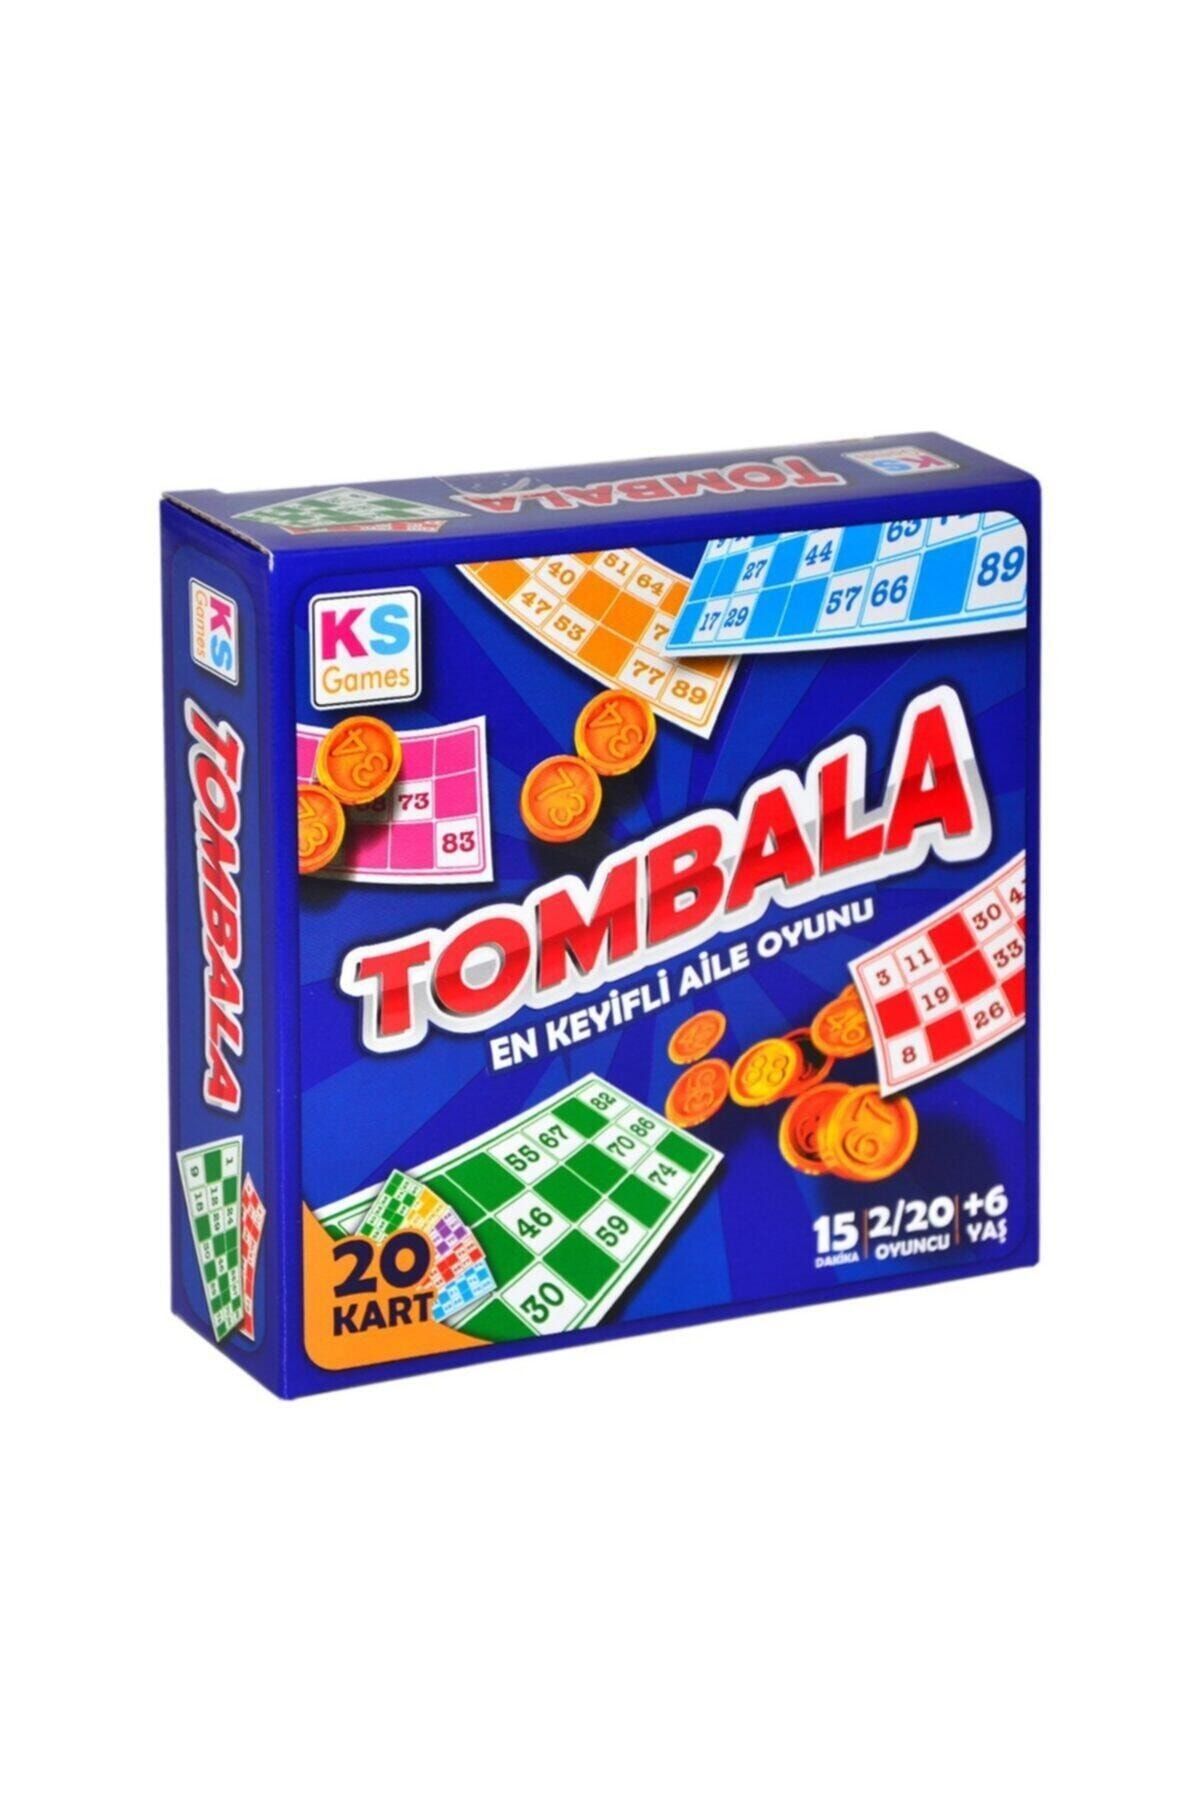 Ks Games Tombala